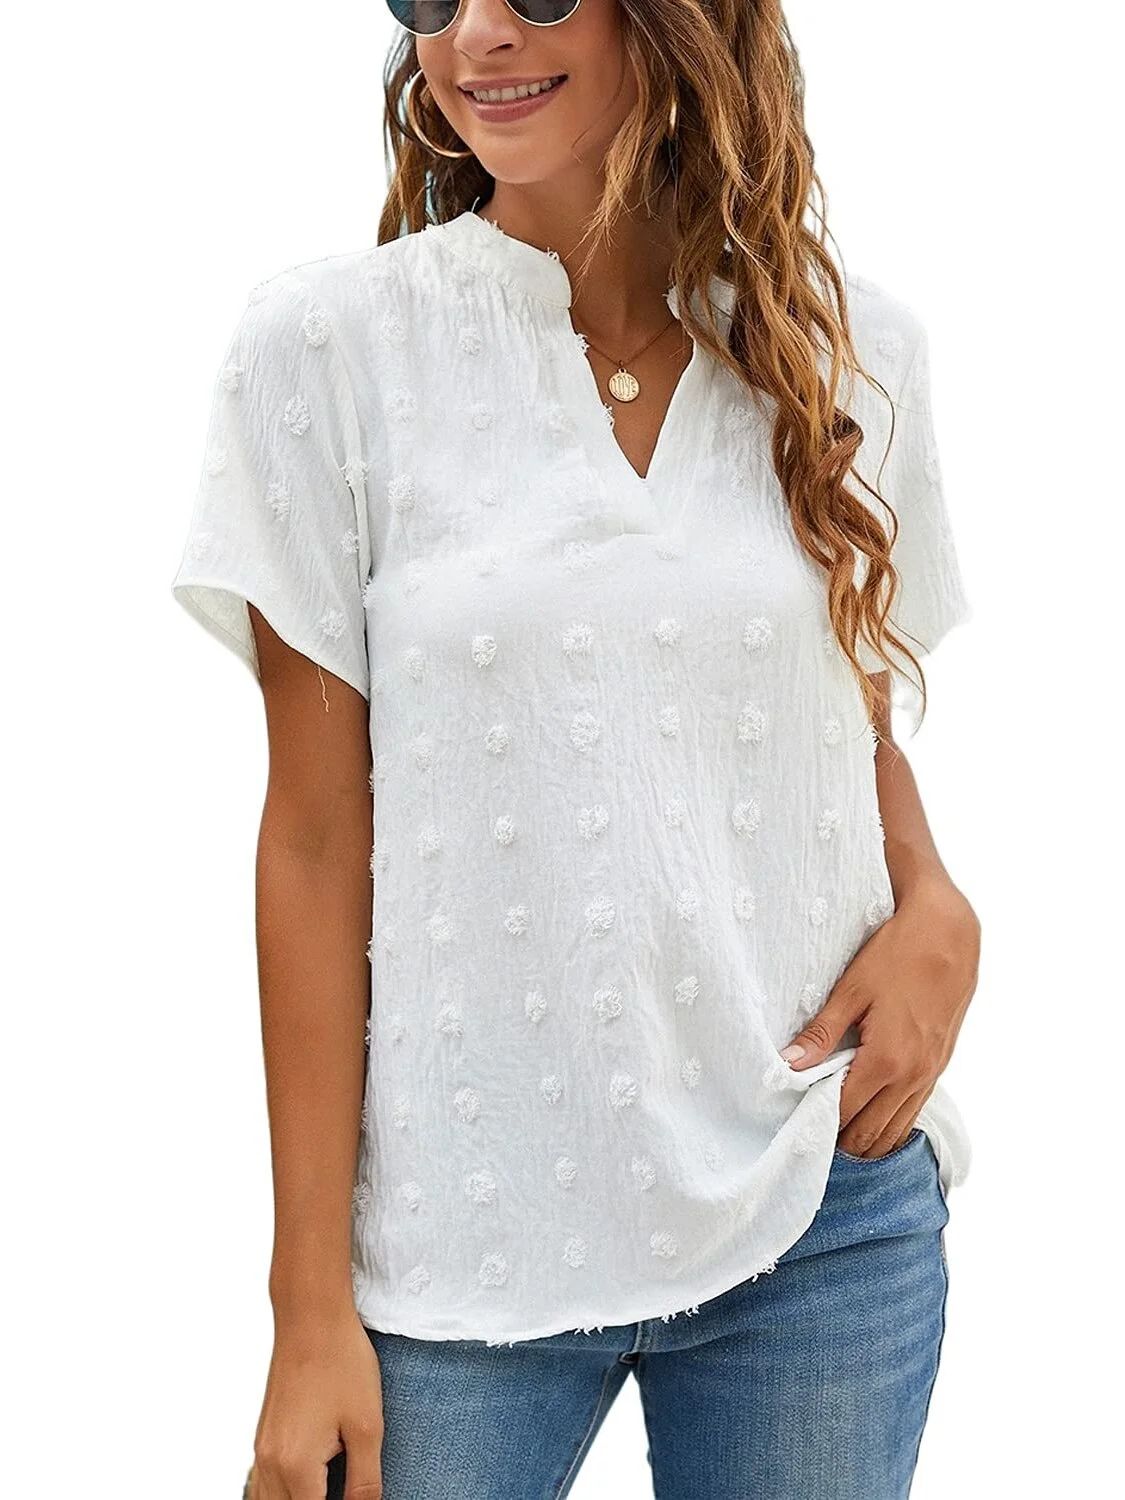 Fantaslook White Chiffon Blouses Womens Short Sleeve V Neck Shirts Summer Casual Polka Dot Tops -... | Walmart (US)